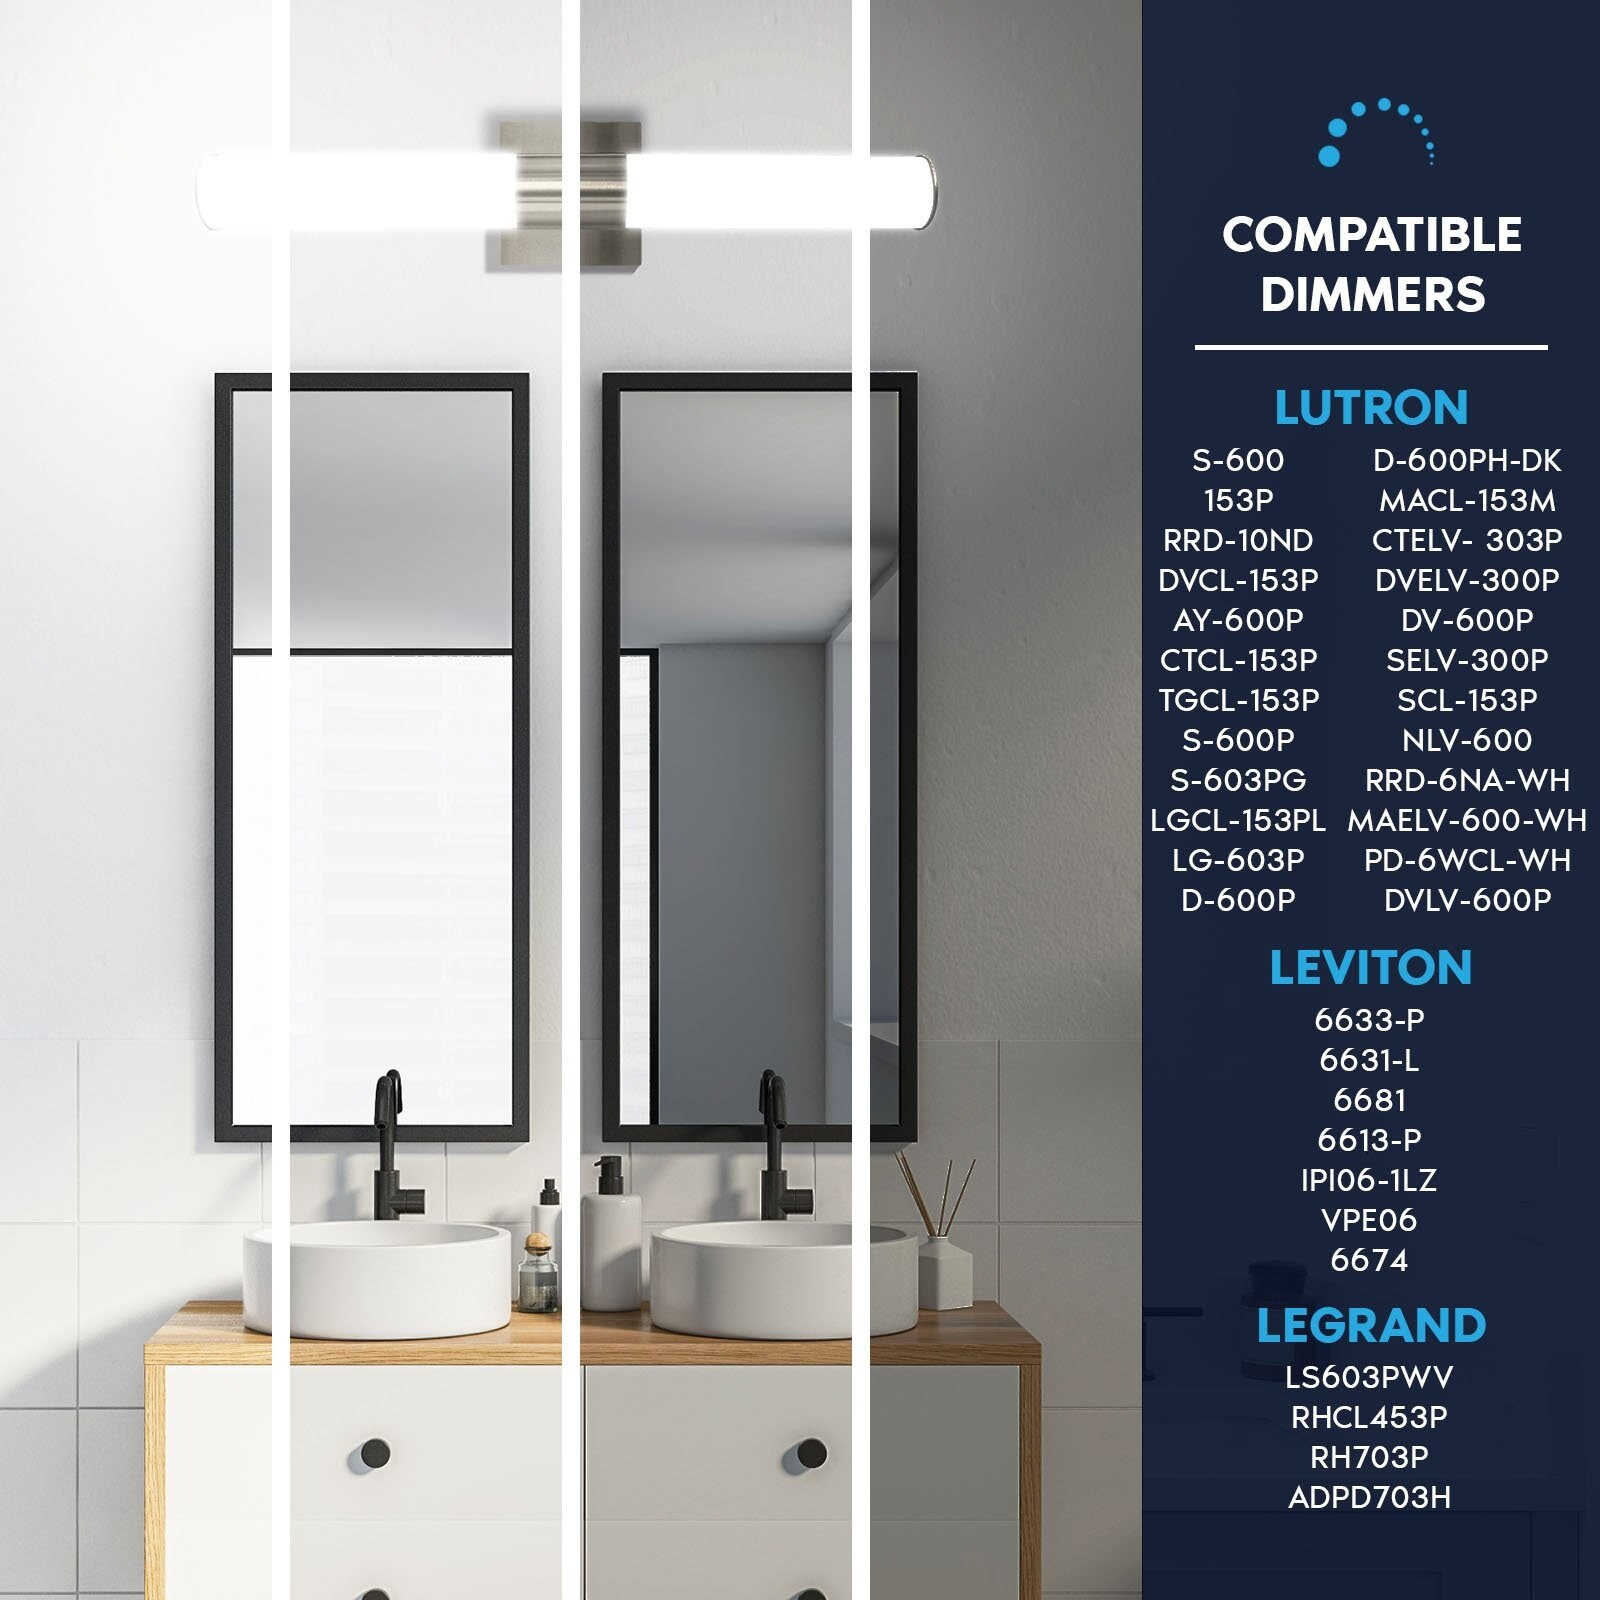 Luxrite LED Bathroom Vanity Light Fixtures 24 Inch Brushed Nickel CCT  2700K-5000K 24W 1700 Lumens CRI 90 Dimmable Bed Bath  Beyond 38036784